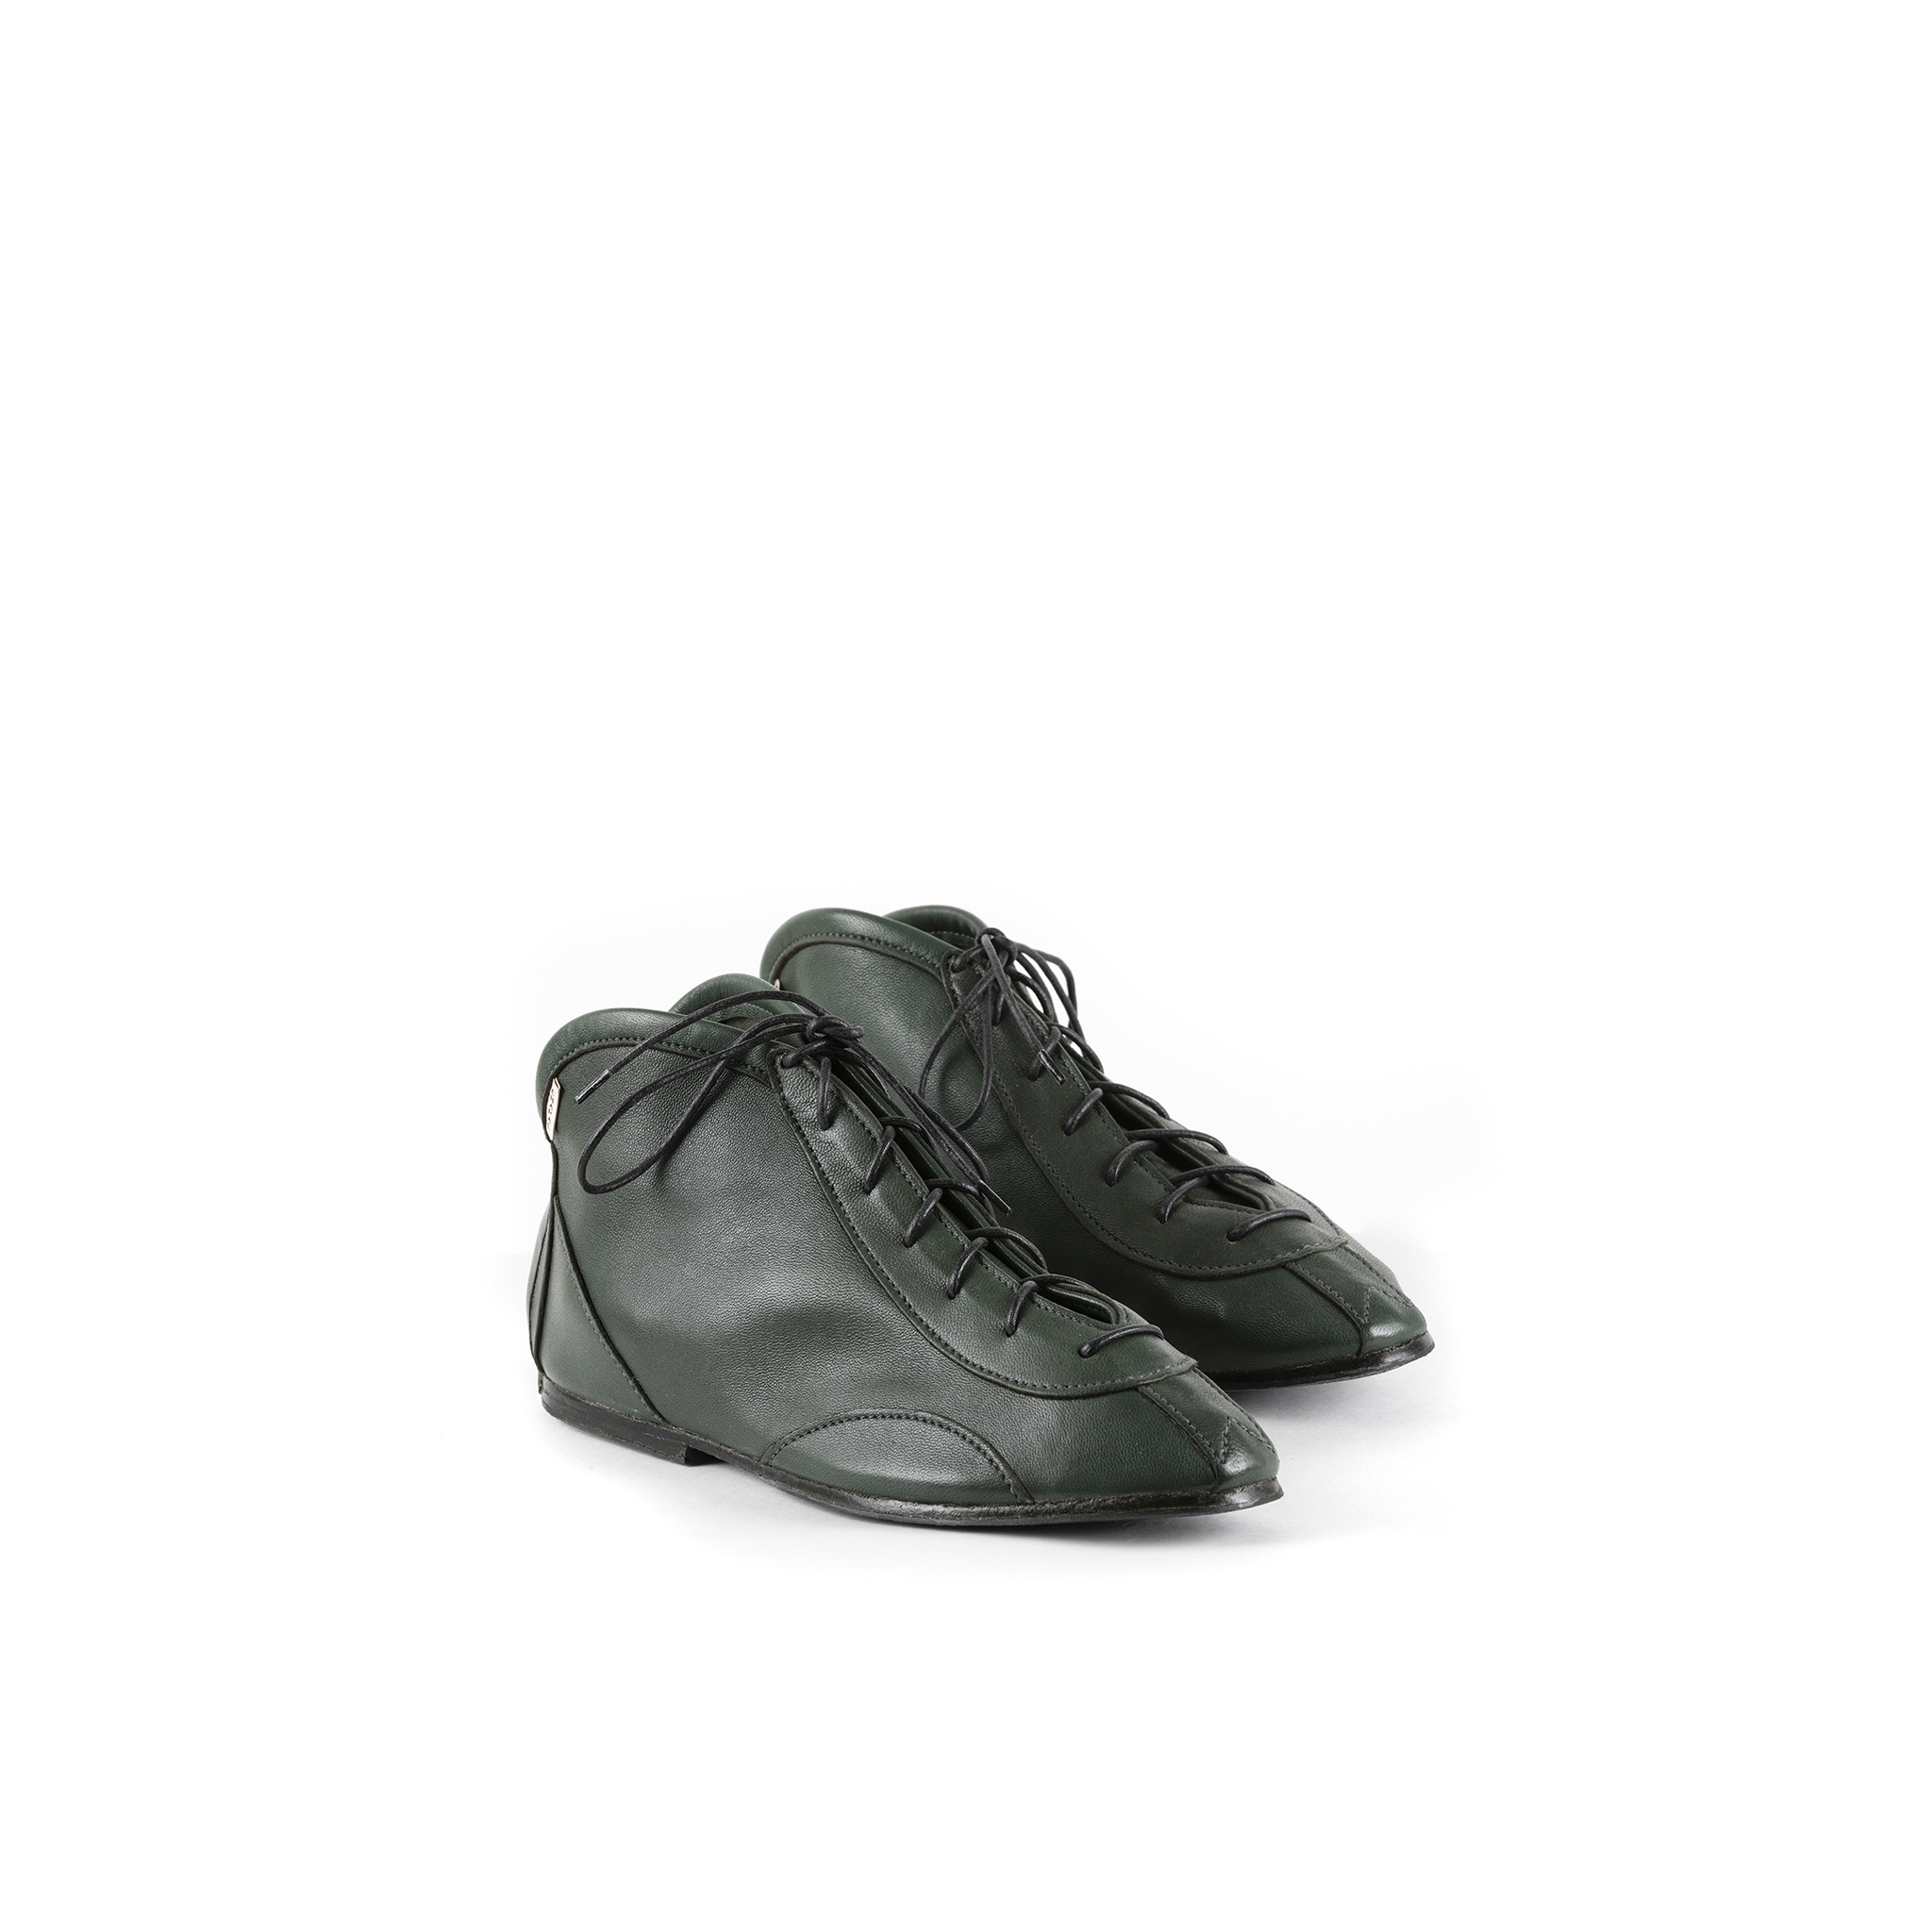 Chaussures Pilote 60's - Cuir glacé - Couleur vert